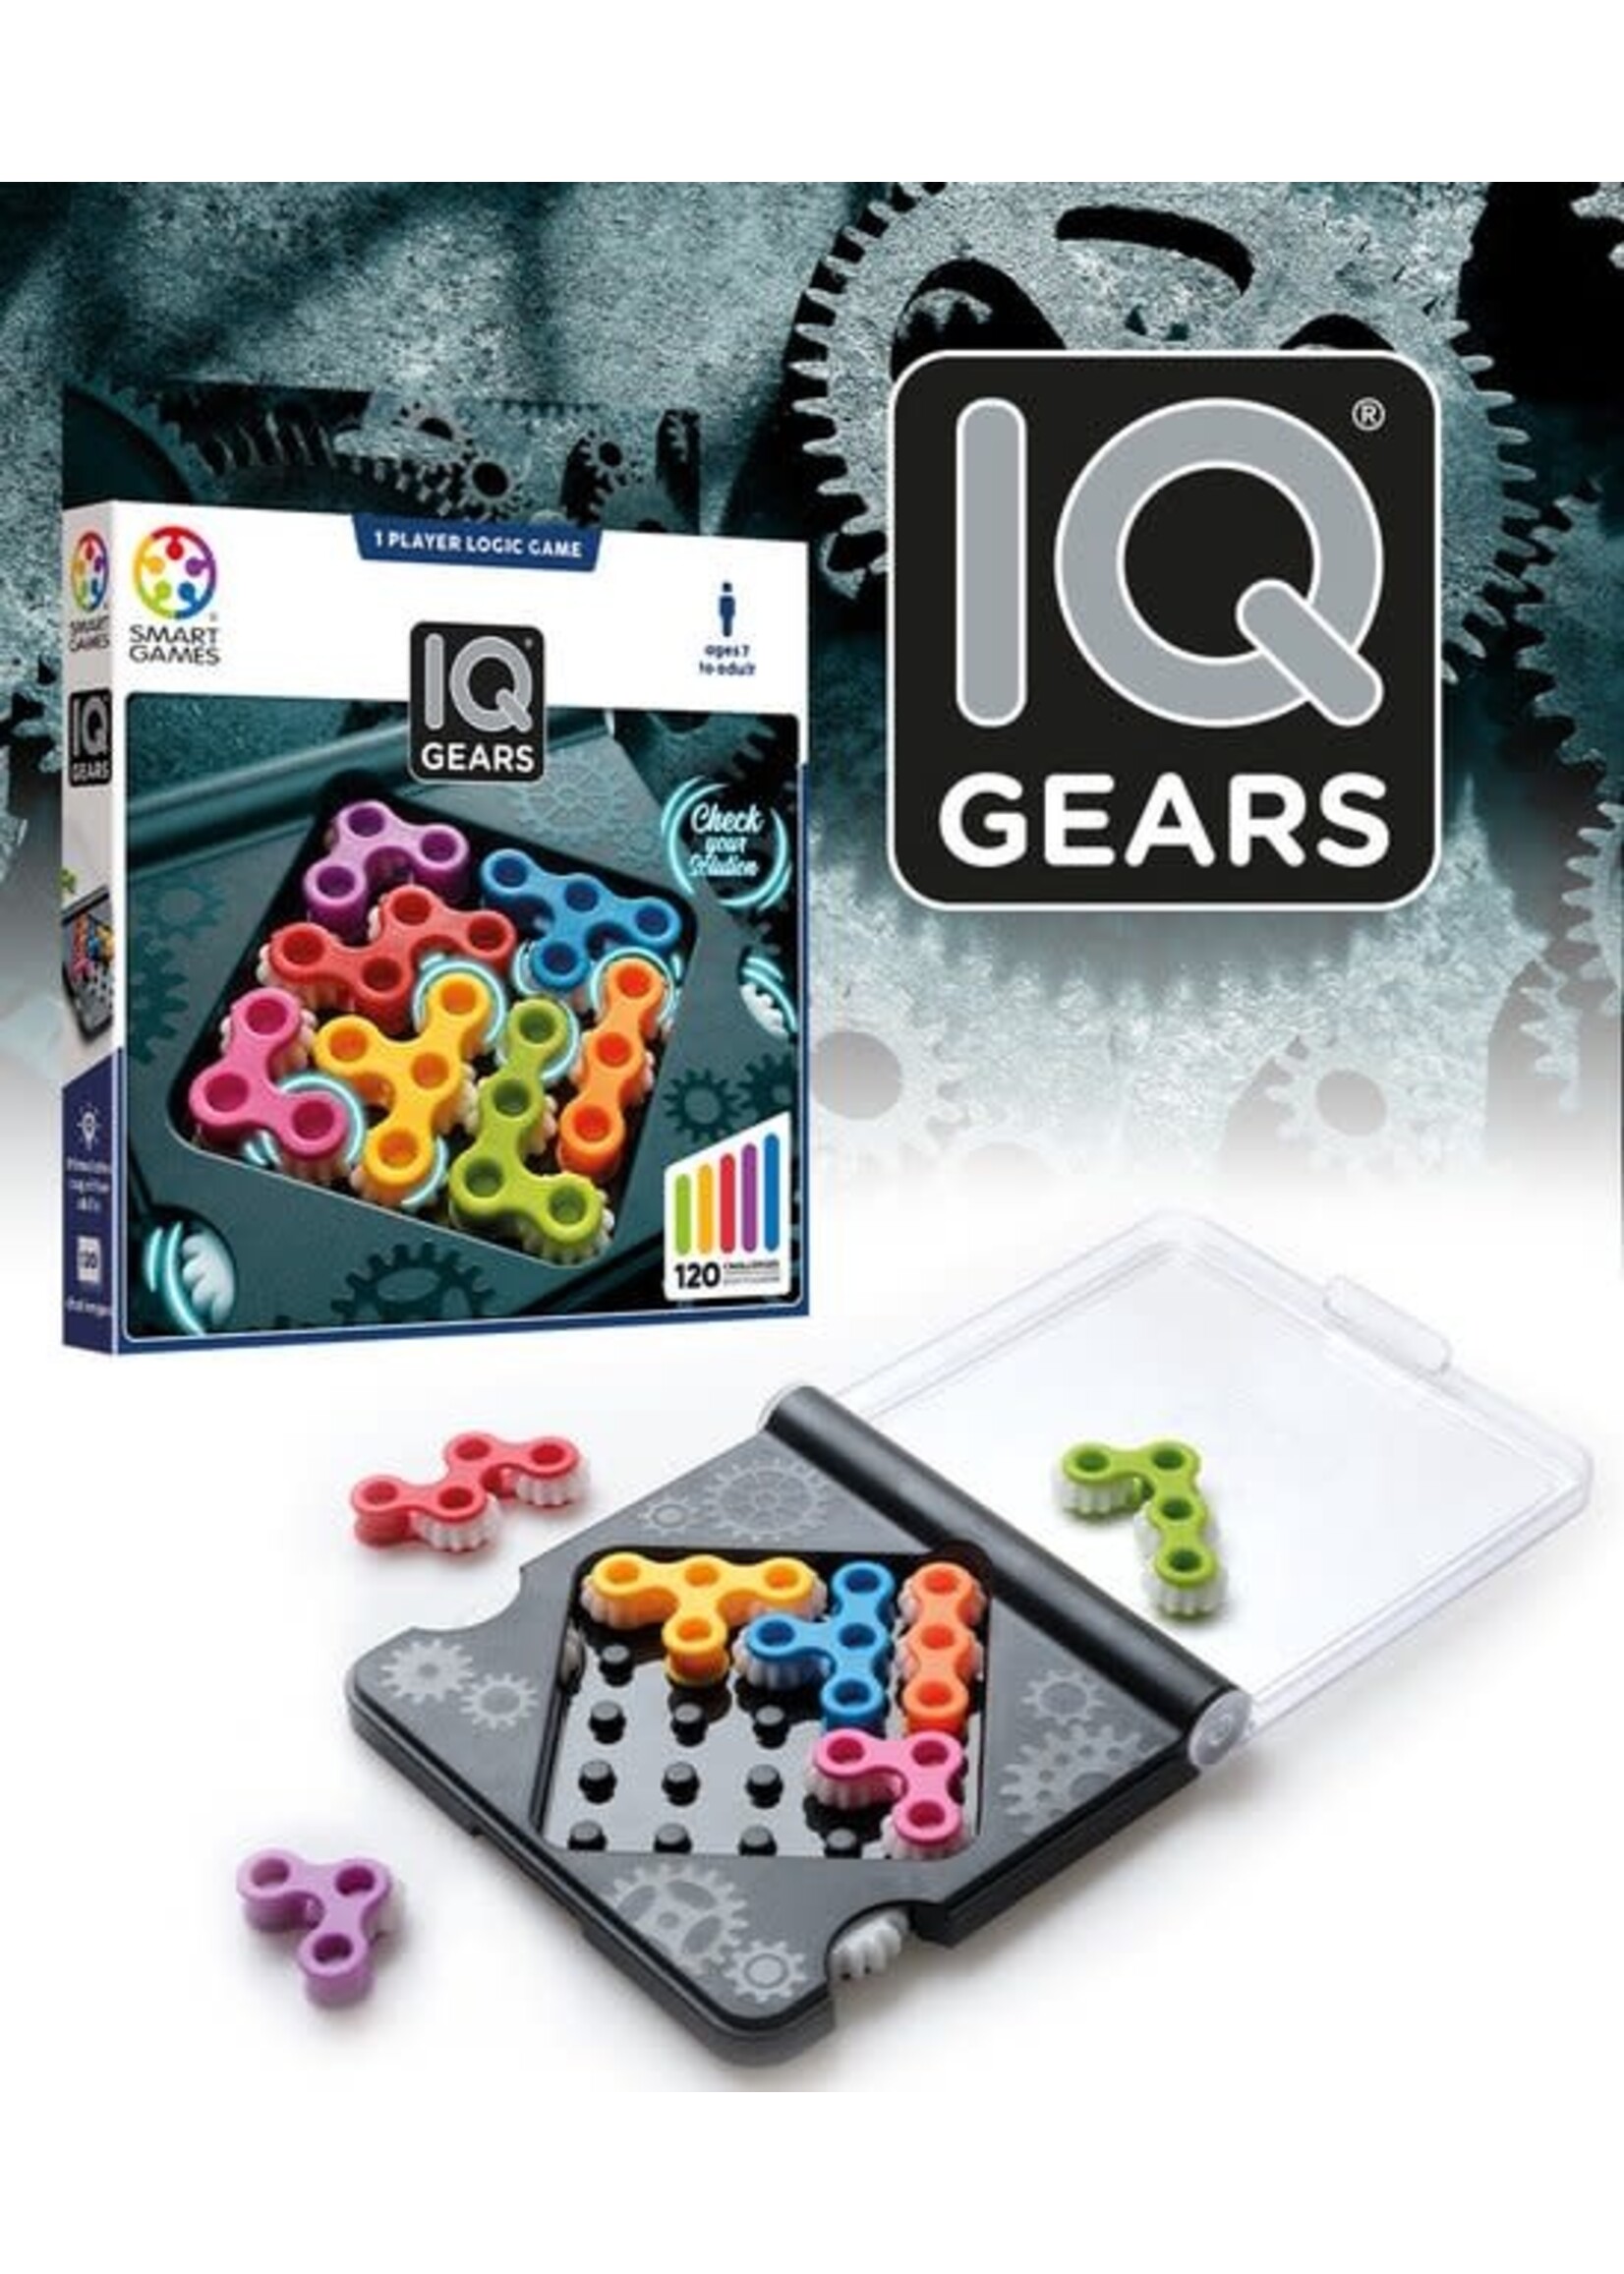 Smartgames SmartGames IQ Gears